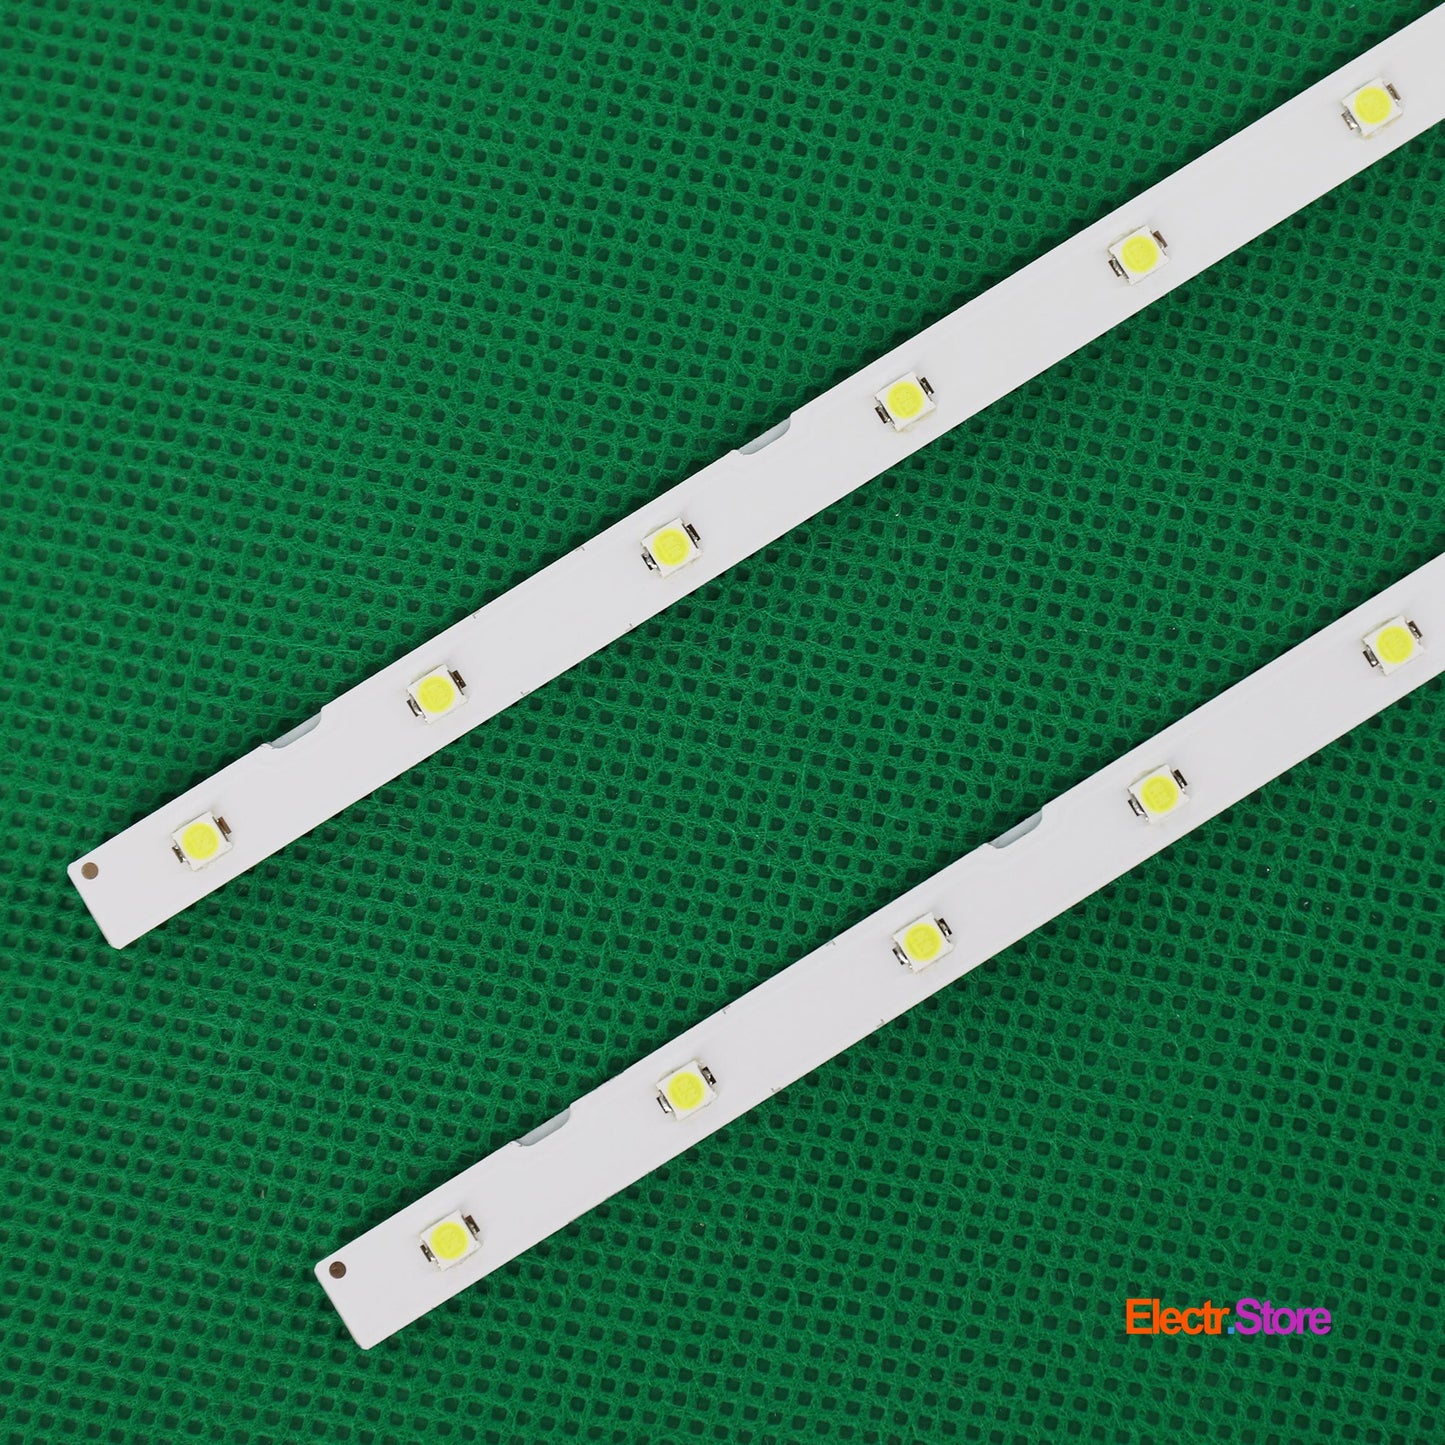 LED Backlight Strip Kits, AOT_40_NU7100F, LM41-00550A, LM41-00549A, BN96-45955A, 2X23LED (2 pcs/kit), for TV 40" PANEL: CY-NN040HGLV3V 40" LED Backlights LM41-00550A Samsung Electr.Store